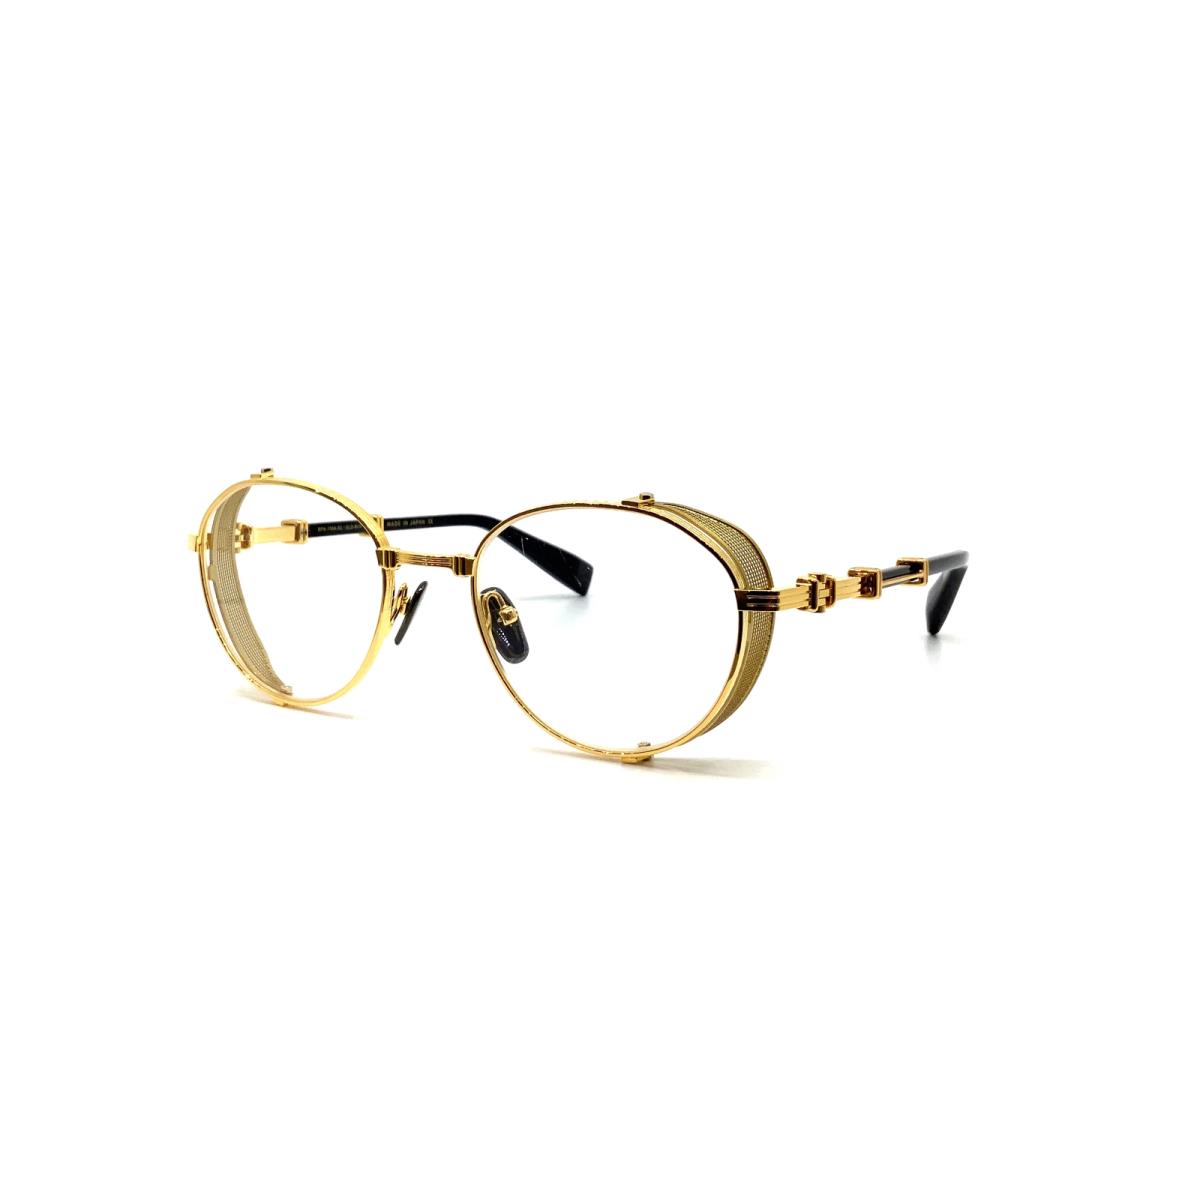 Balmain Eyeglasses Brigade I Black Gold Full Rim Frames 52MM Rx-able